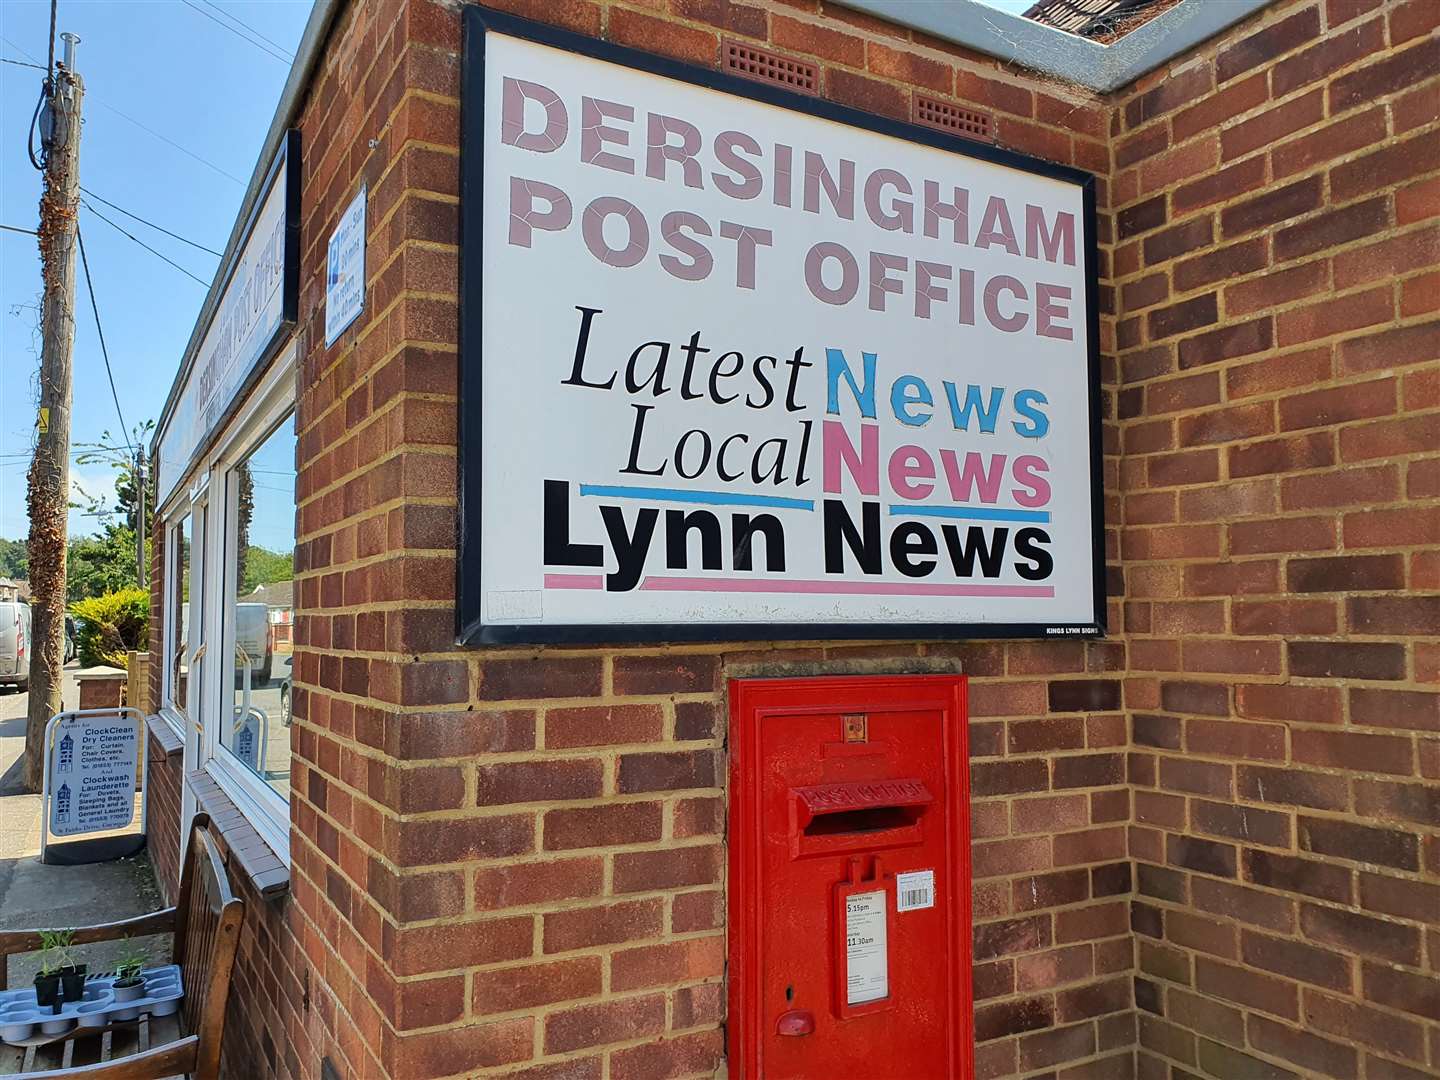 Dersingham Post Office